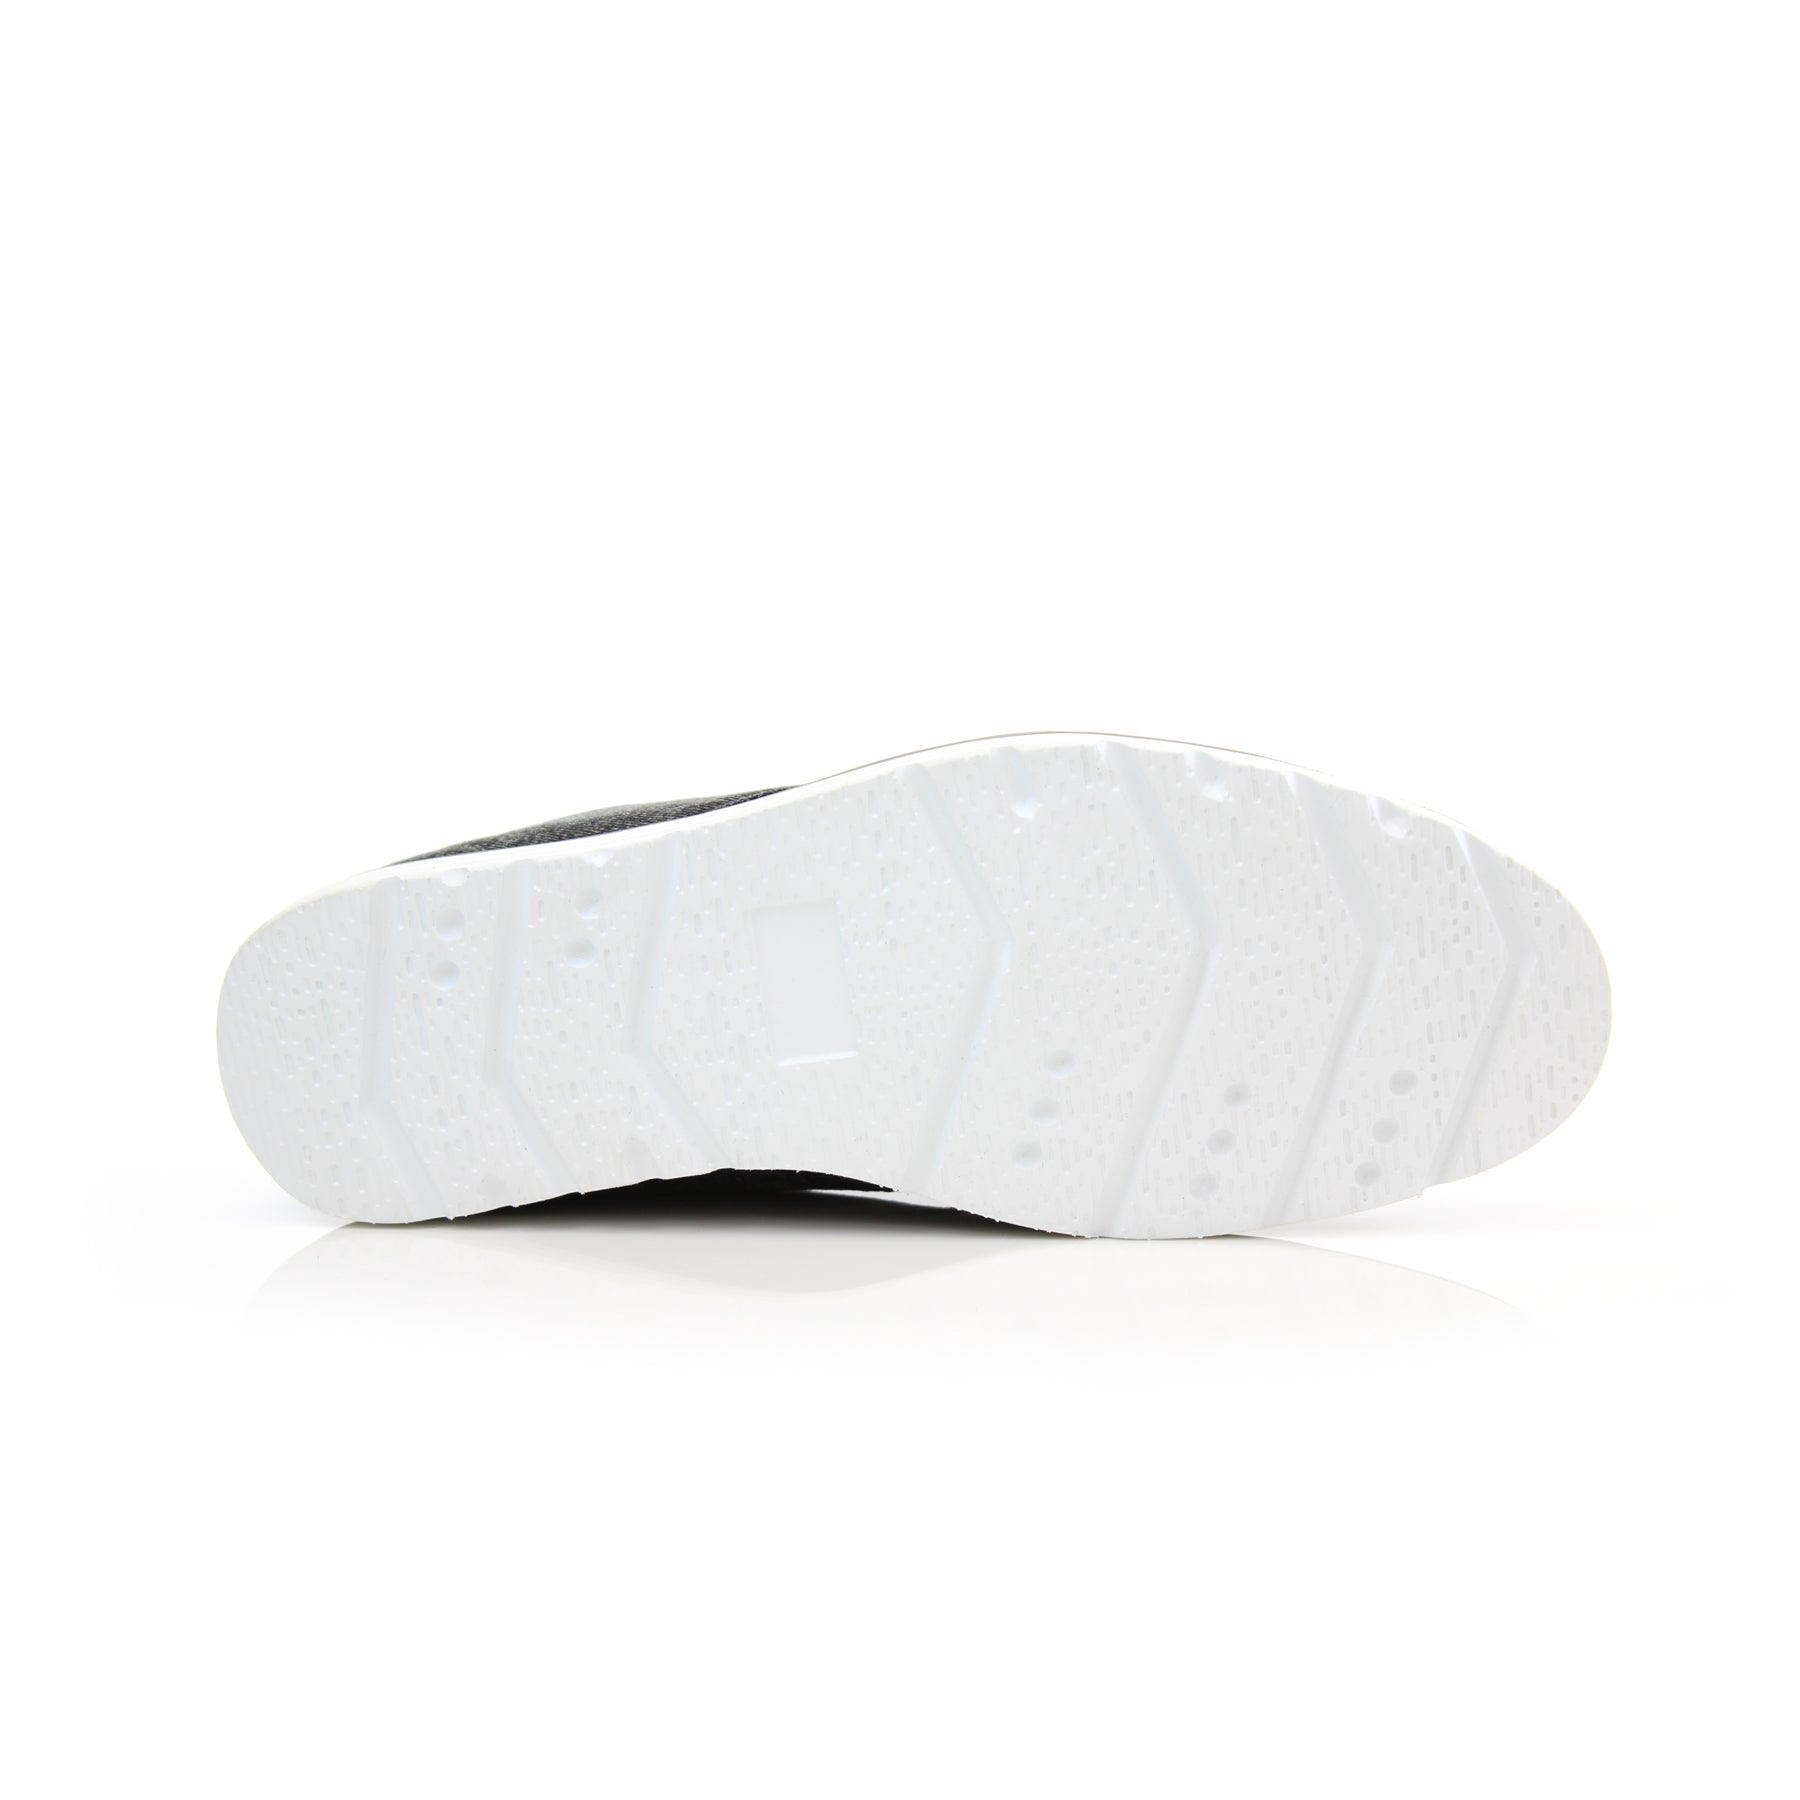 Denim Sneakers | Elton by Polar Fox | Conal Footwear | Bottom Sole Angle View